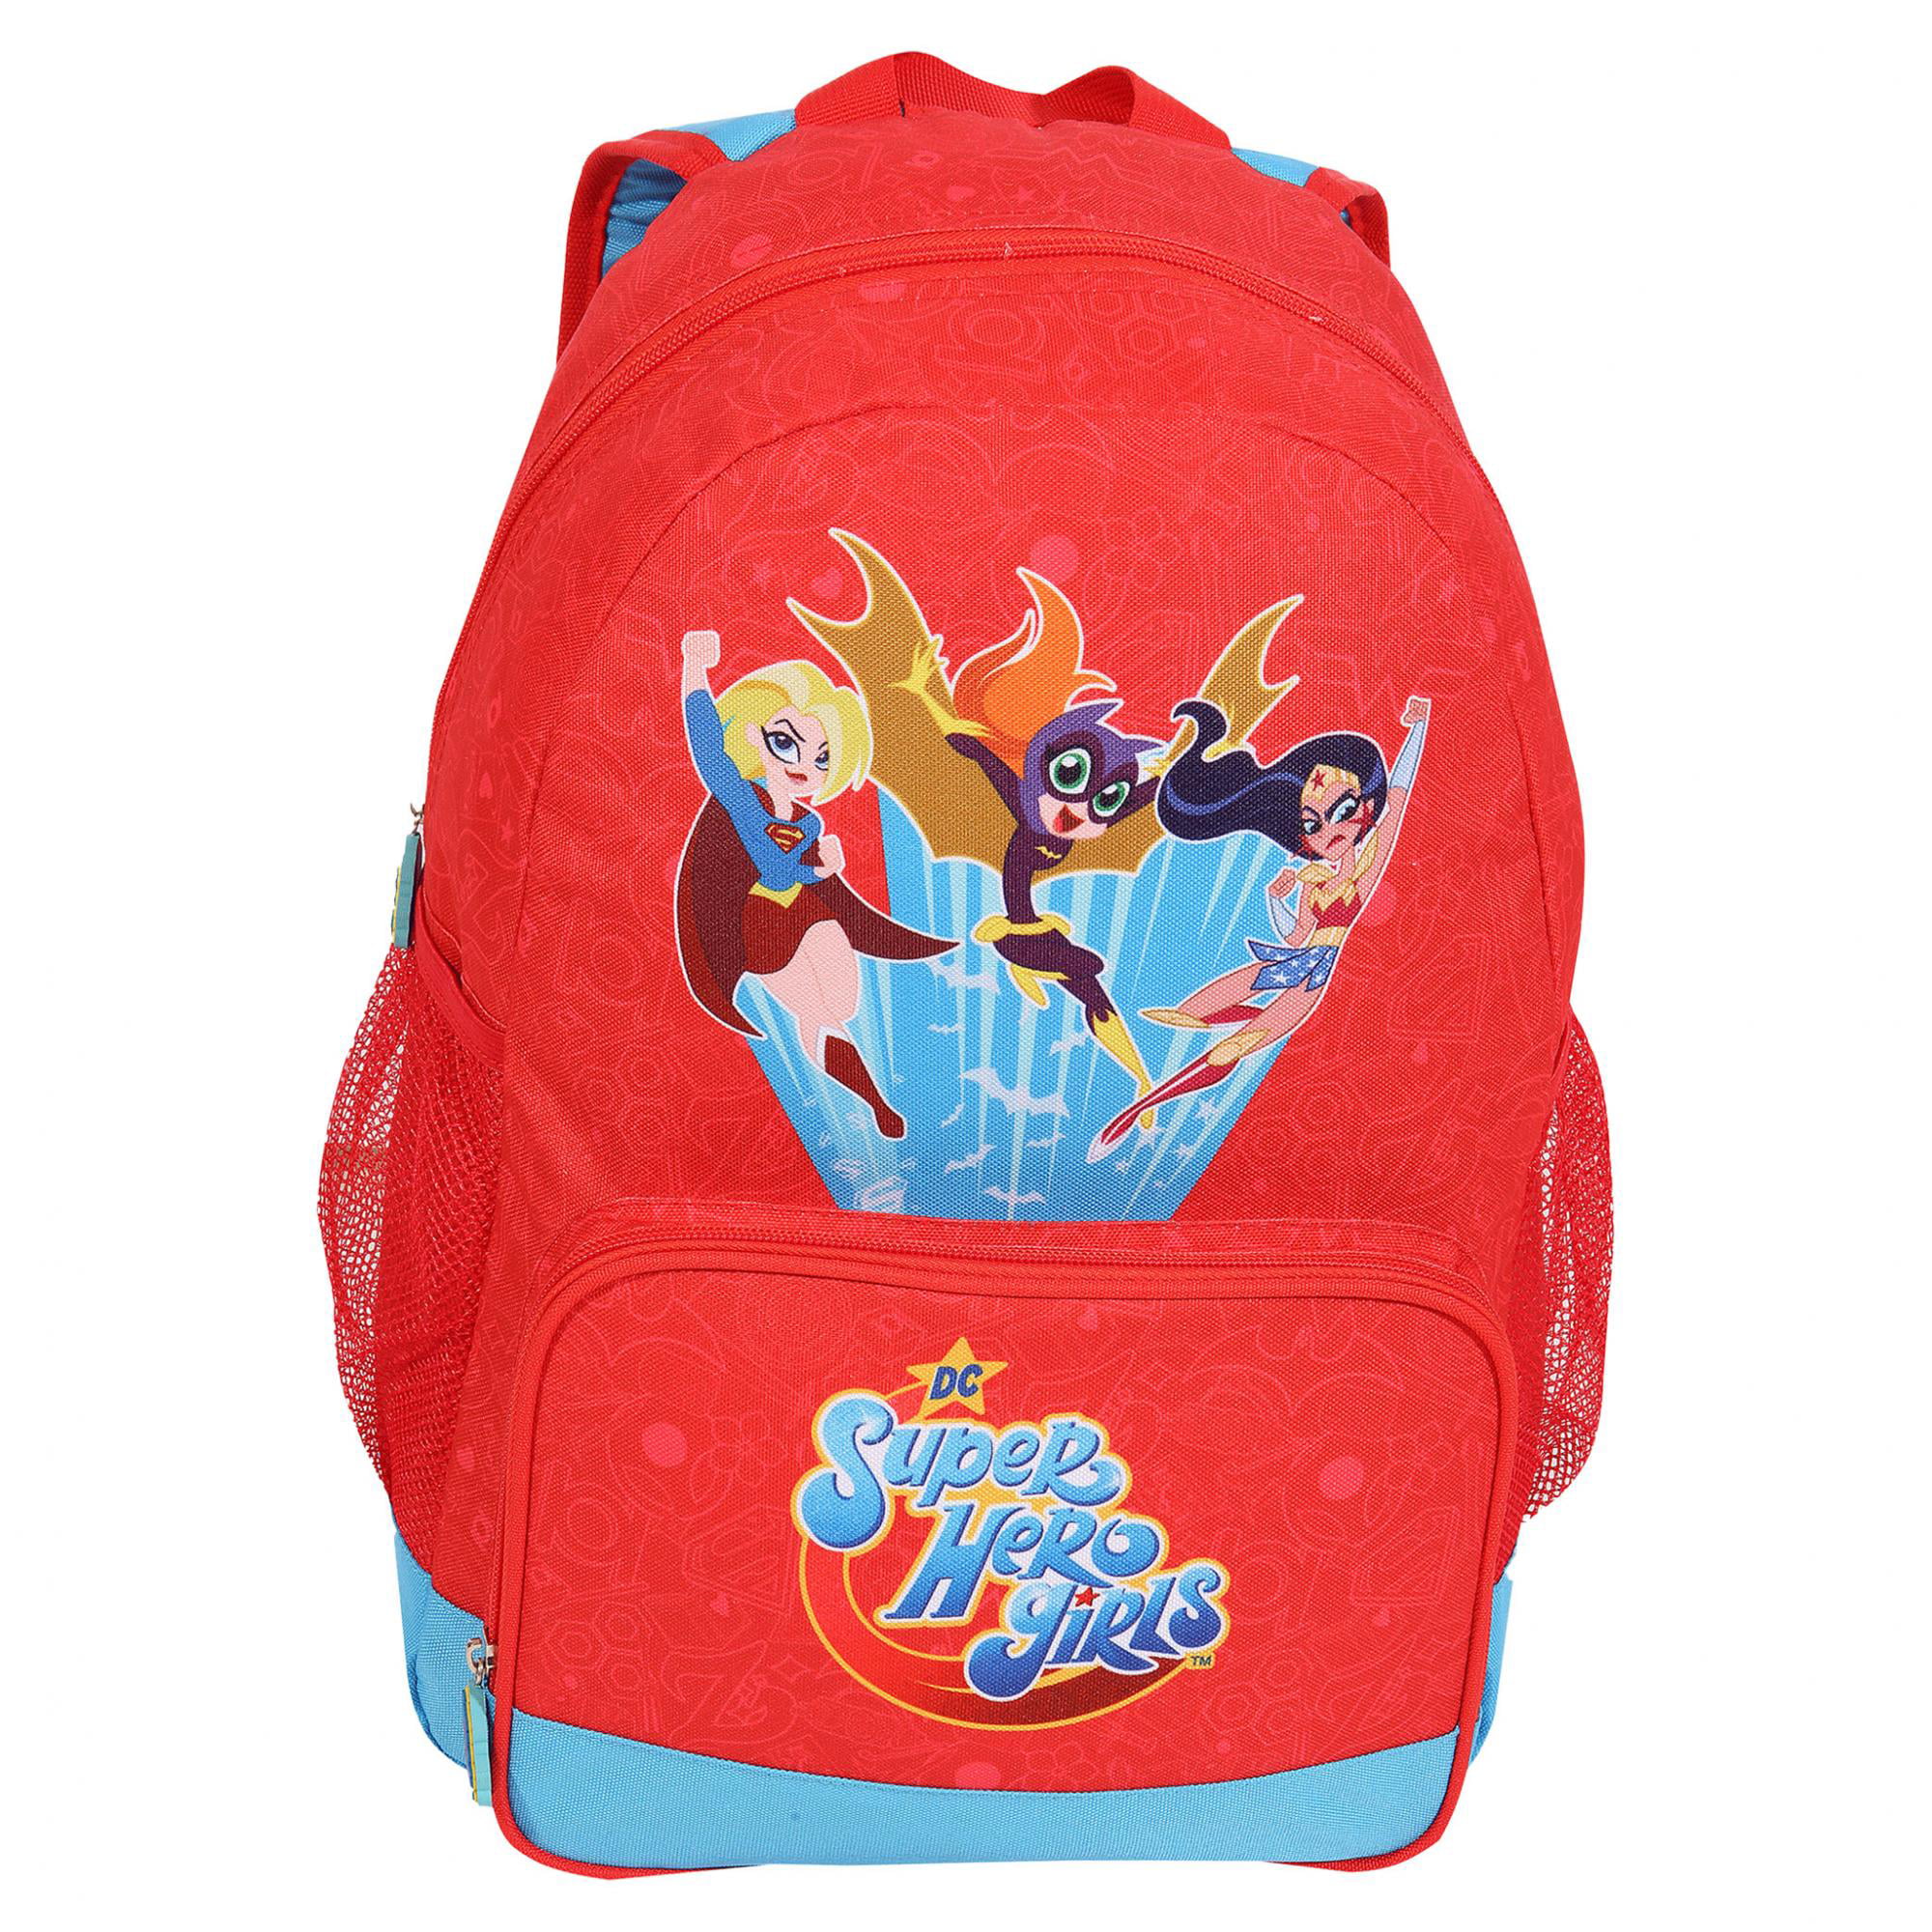 Deluxe 11 Inch Superhero Mini Backpack Featuring Supergirl and Batgirl Logos Super Hero Girls Toddler Preschool Backpack 